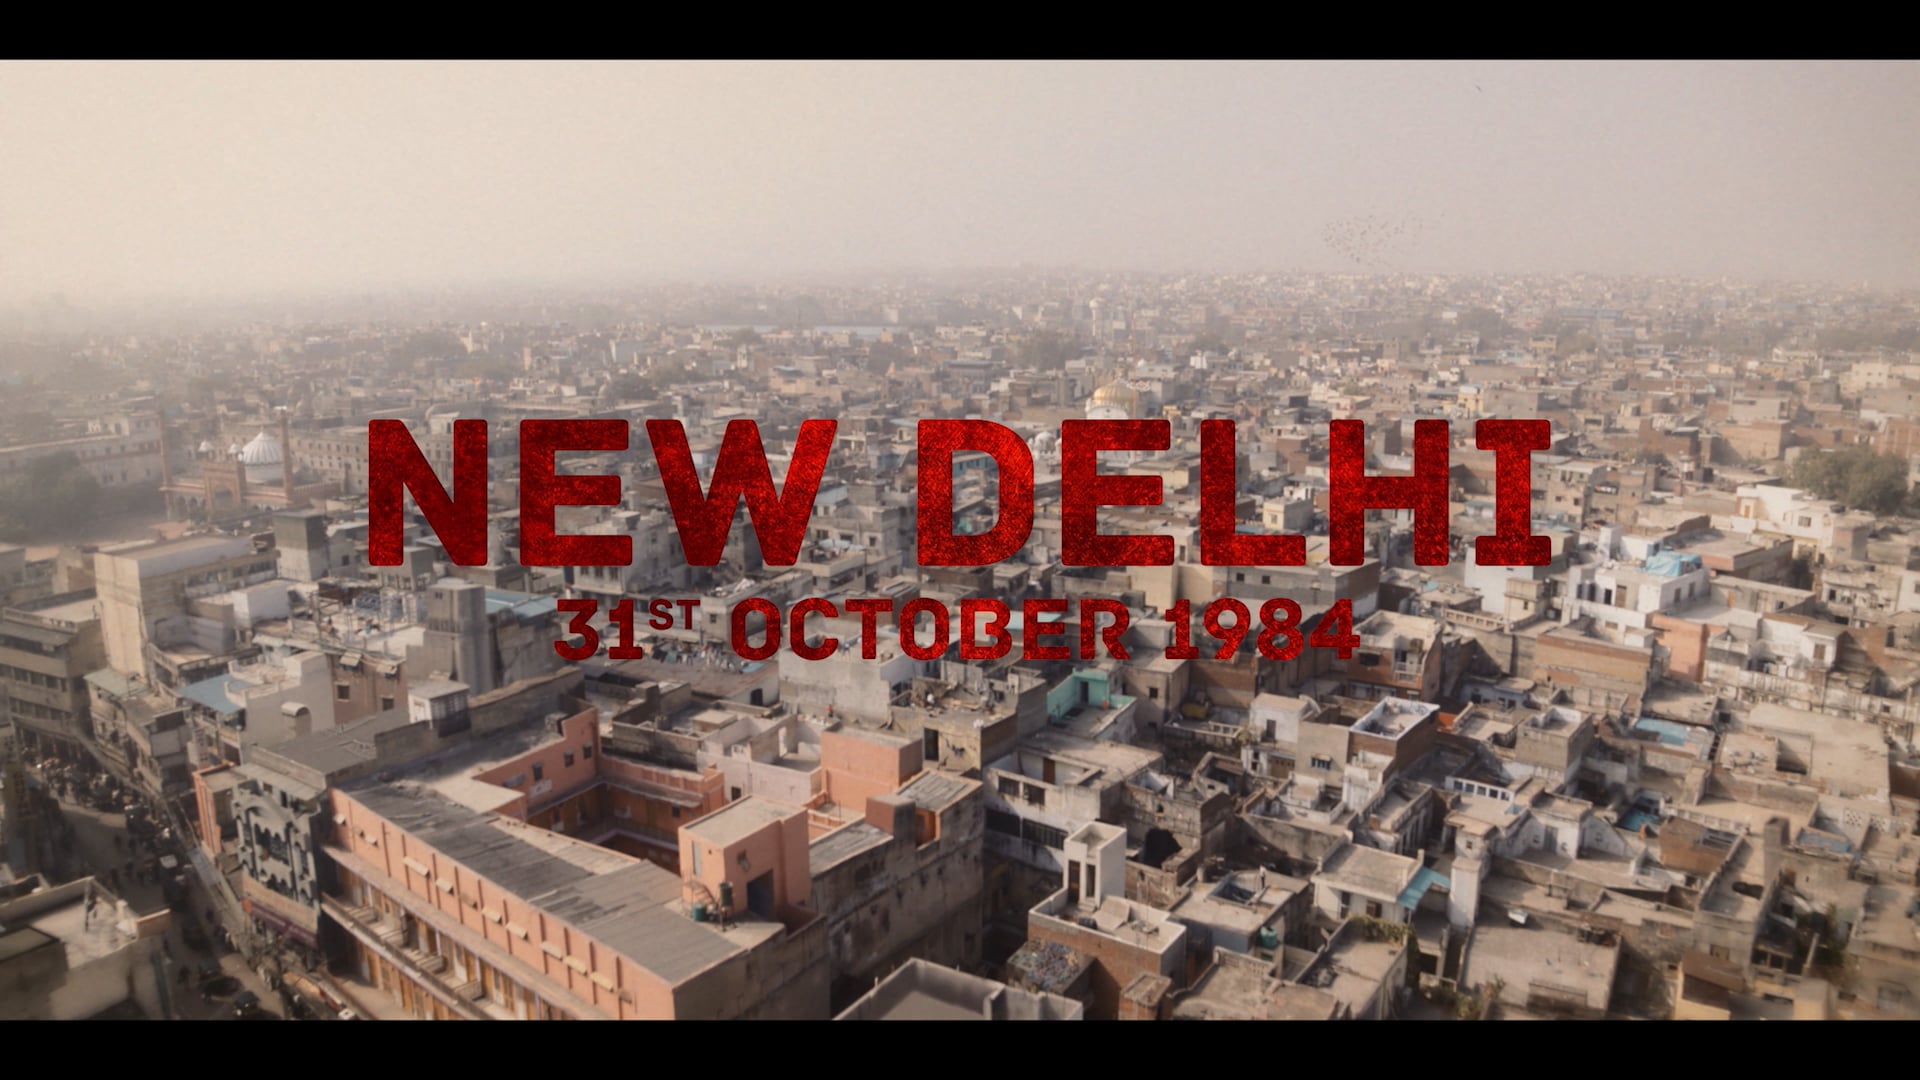 Jogi | Official Trailer | Diljit Dosanjh, Hiten Tejwani, Zeeshan Ayyub, Amyra Dastur | Netflix India